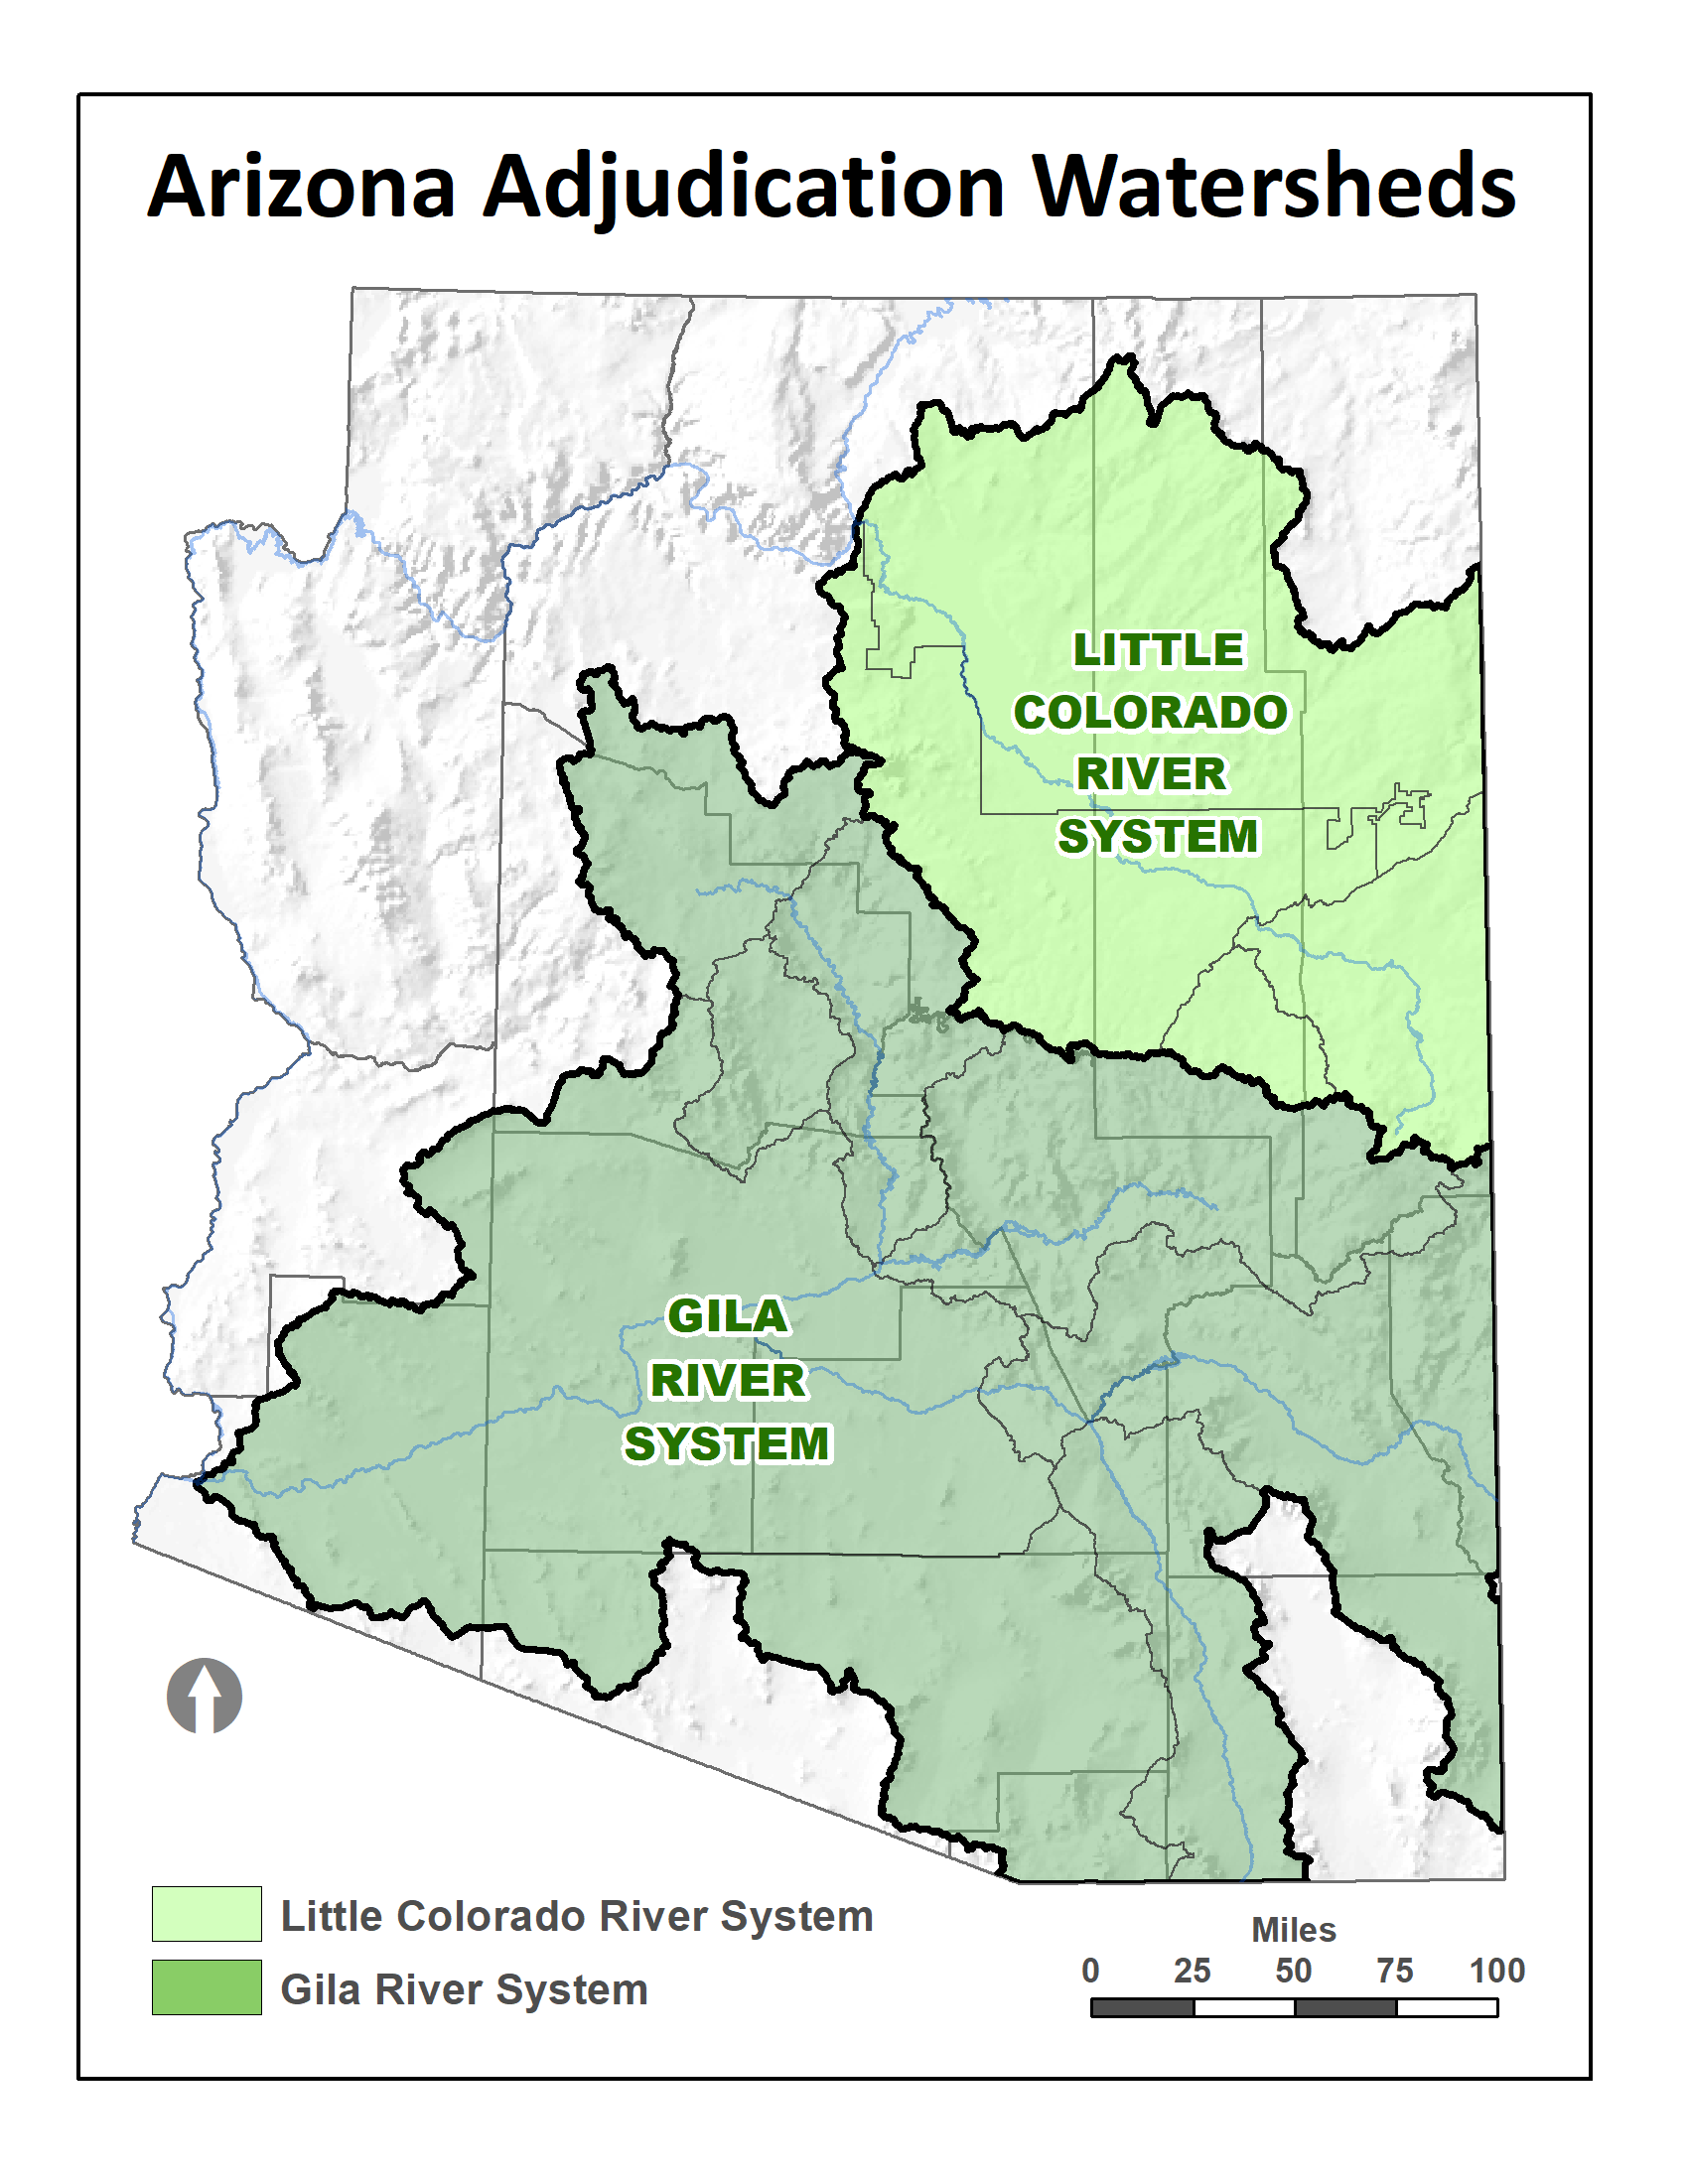 Map showing Arizona's water adjudication areas